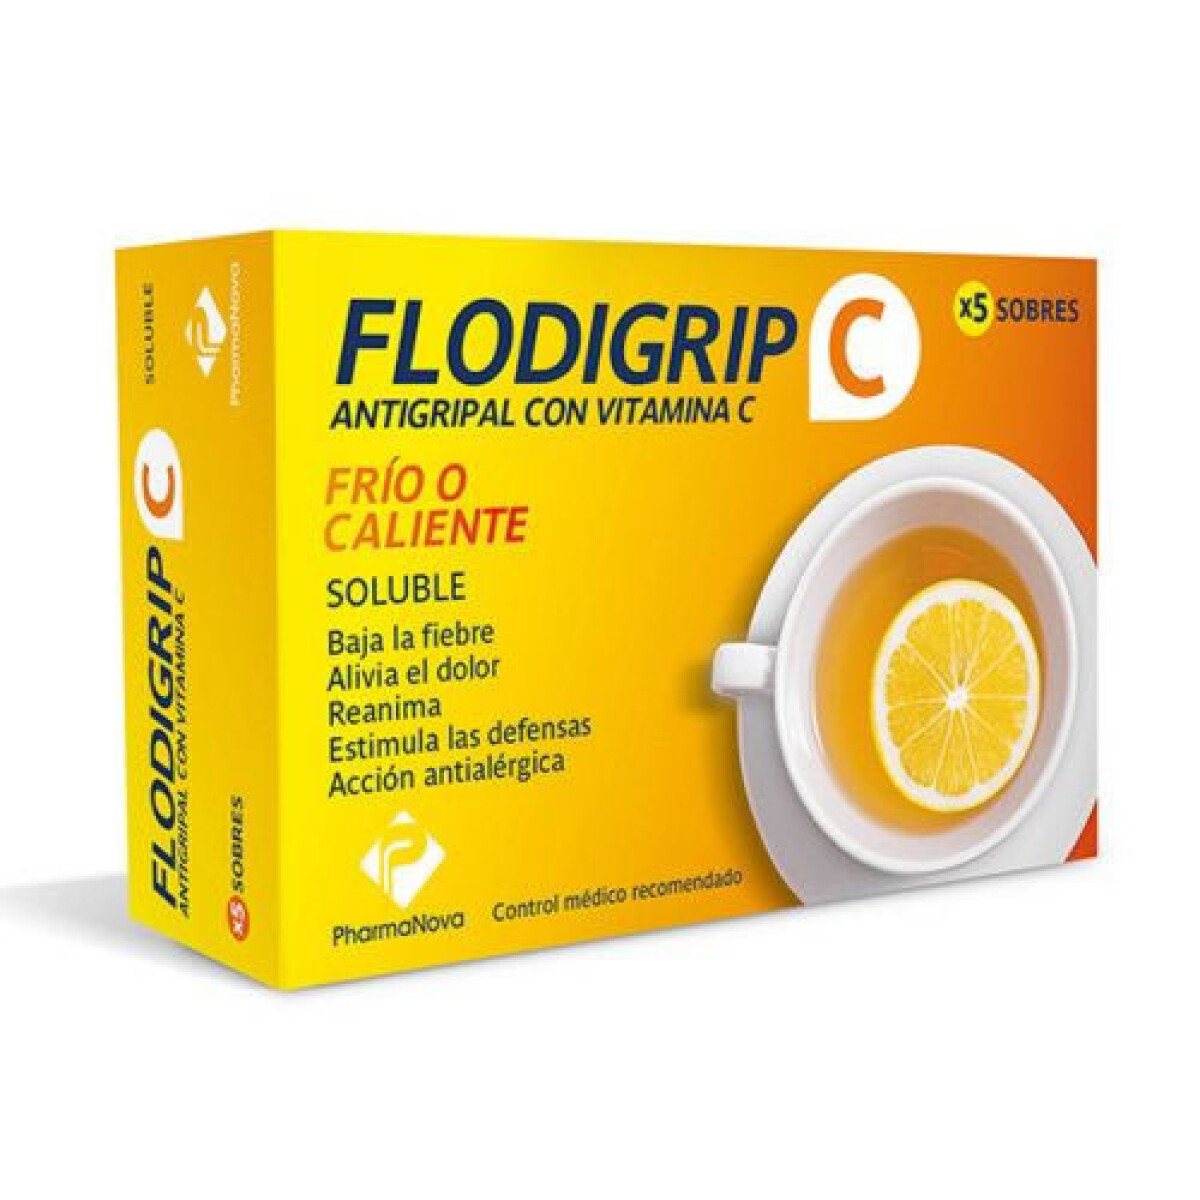 FLODIGRIP C X5 SOBRES 